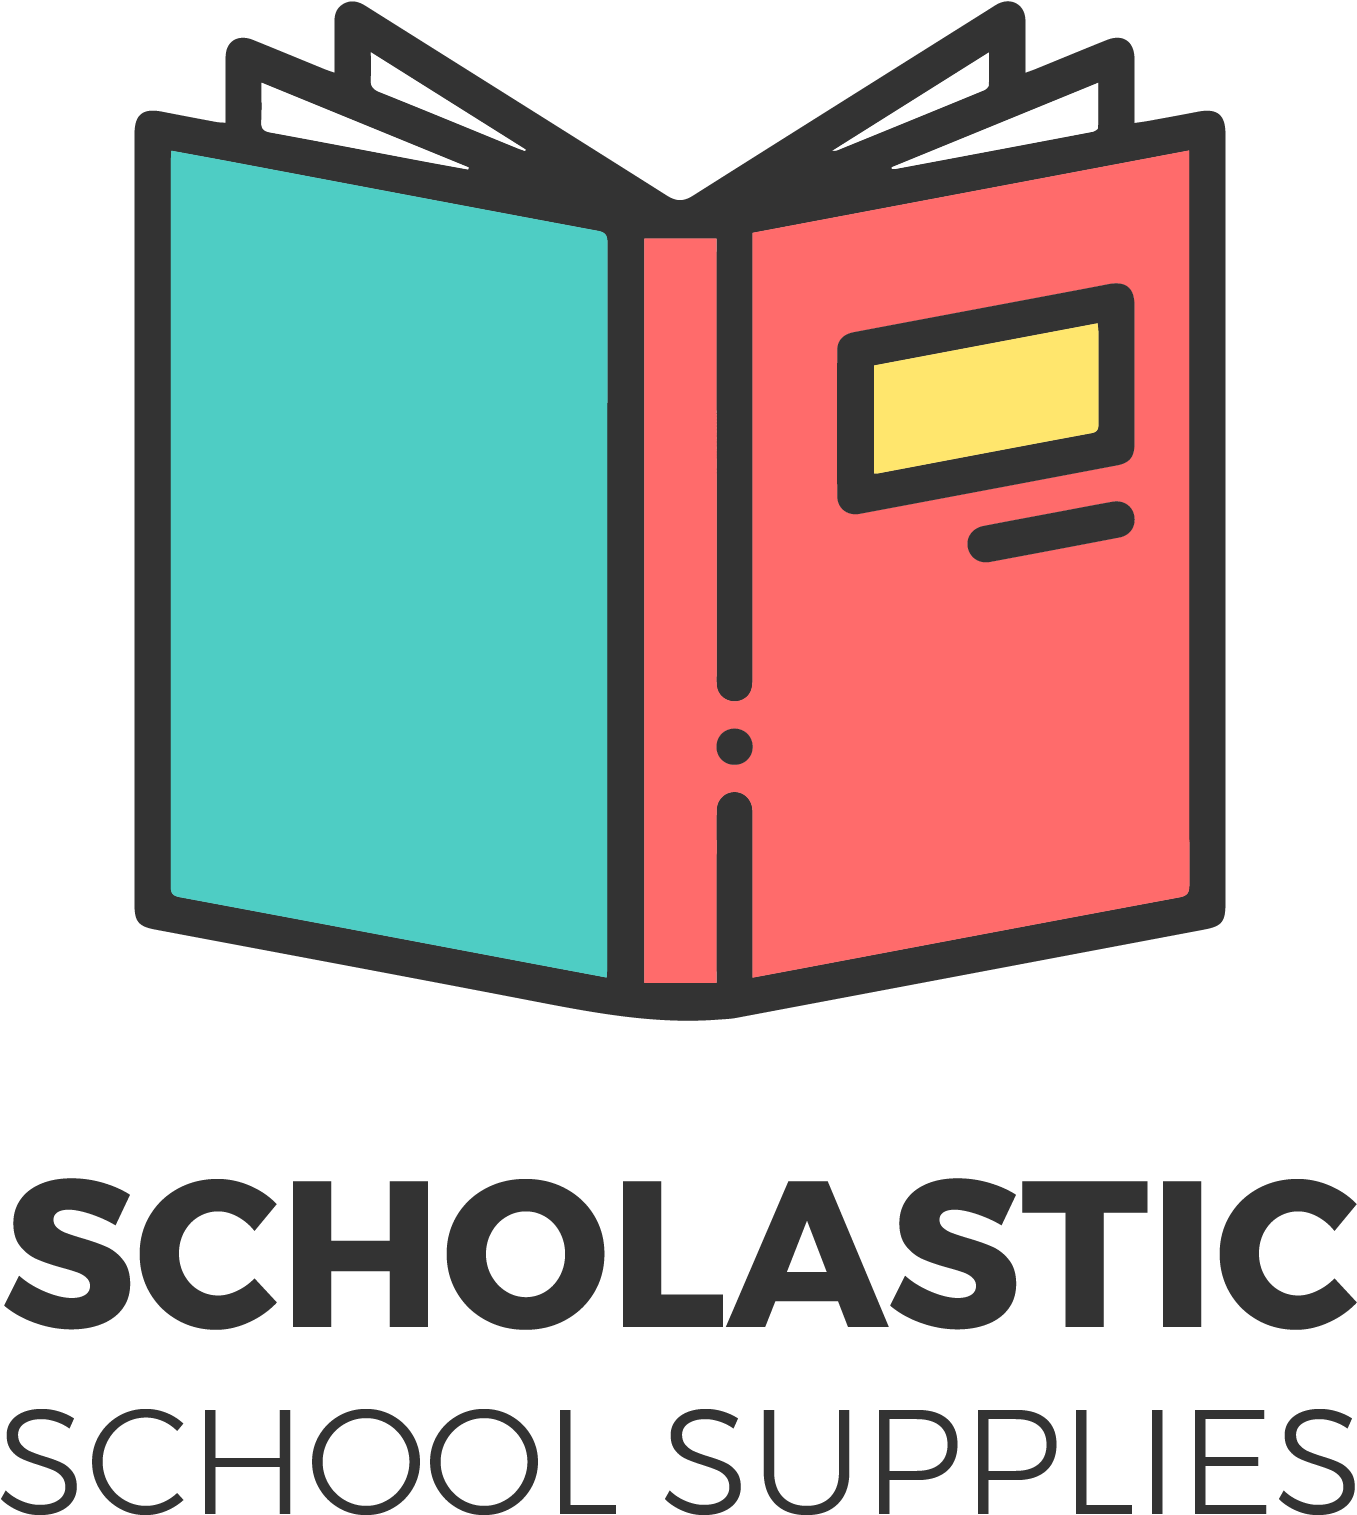 Scholastic School Supplies - Scholastic Corporation (1600x1600)